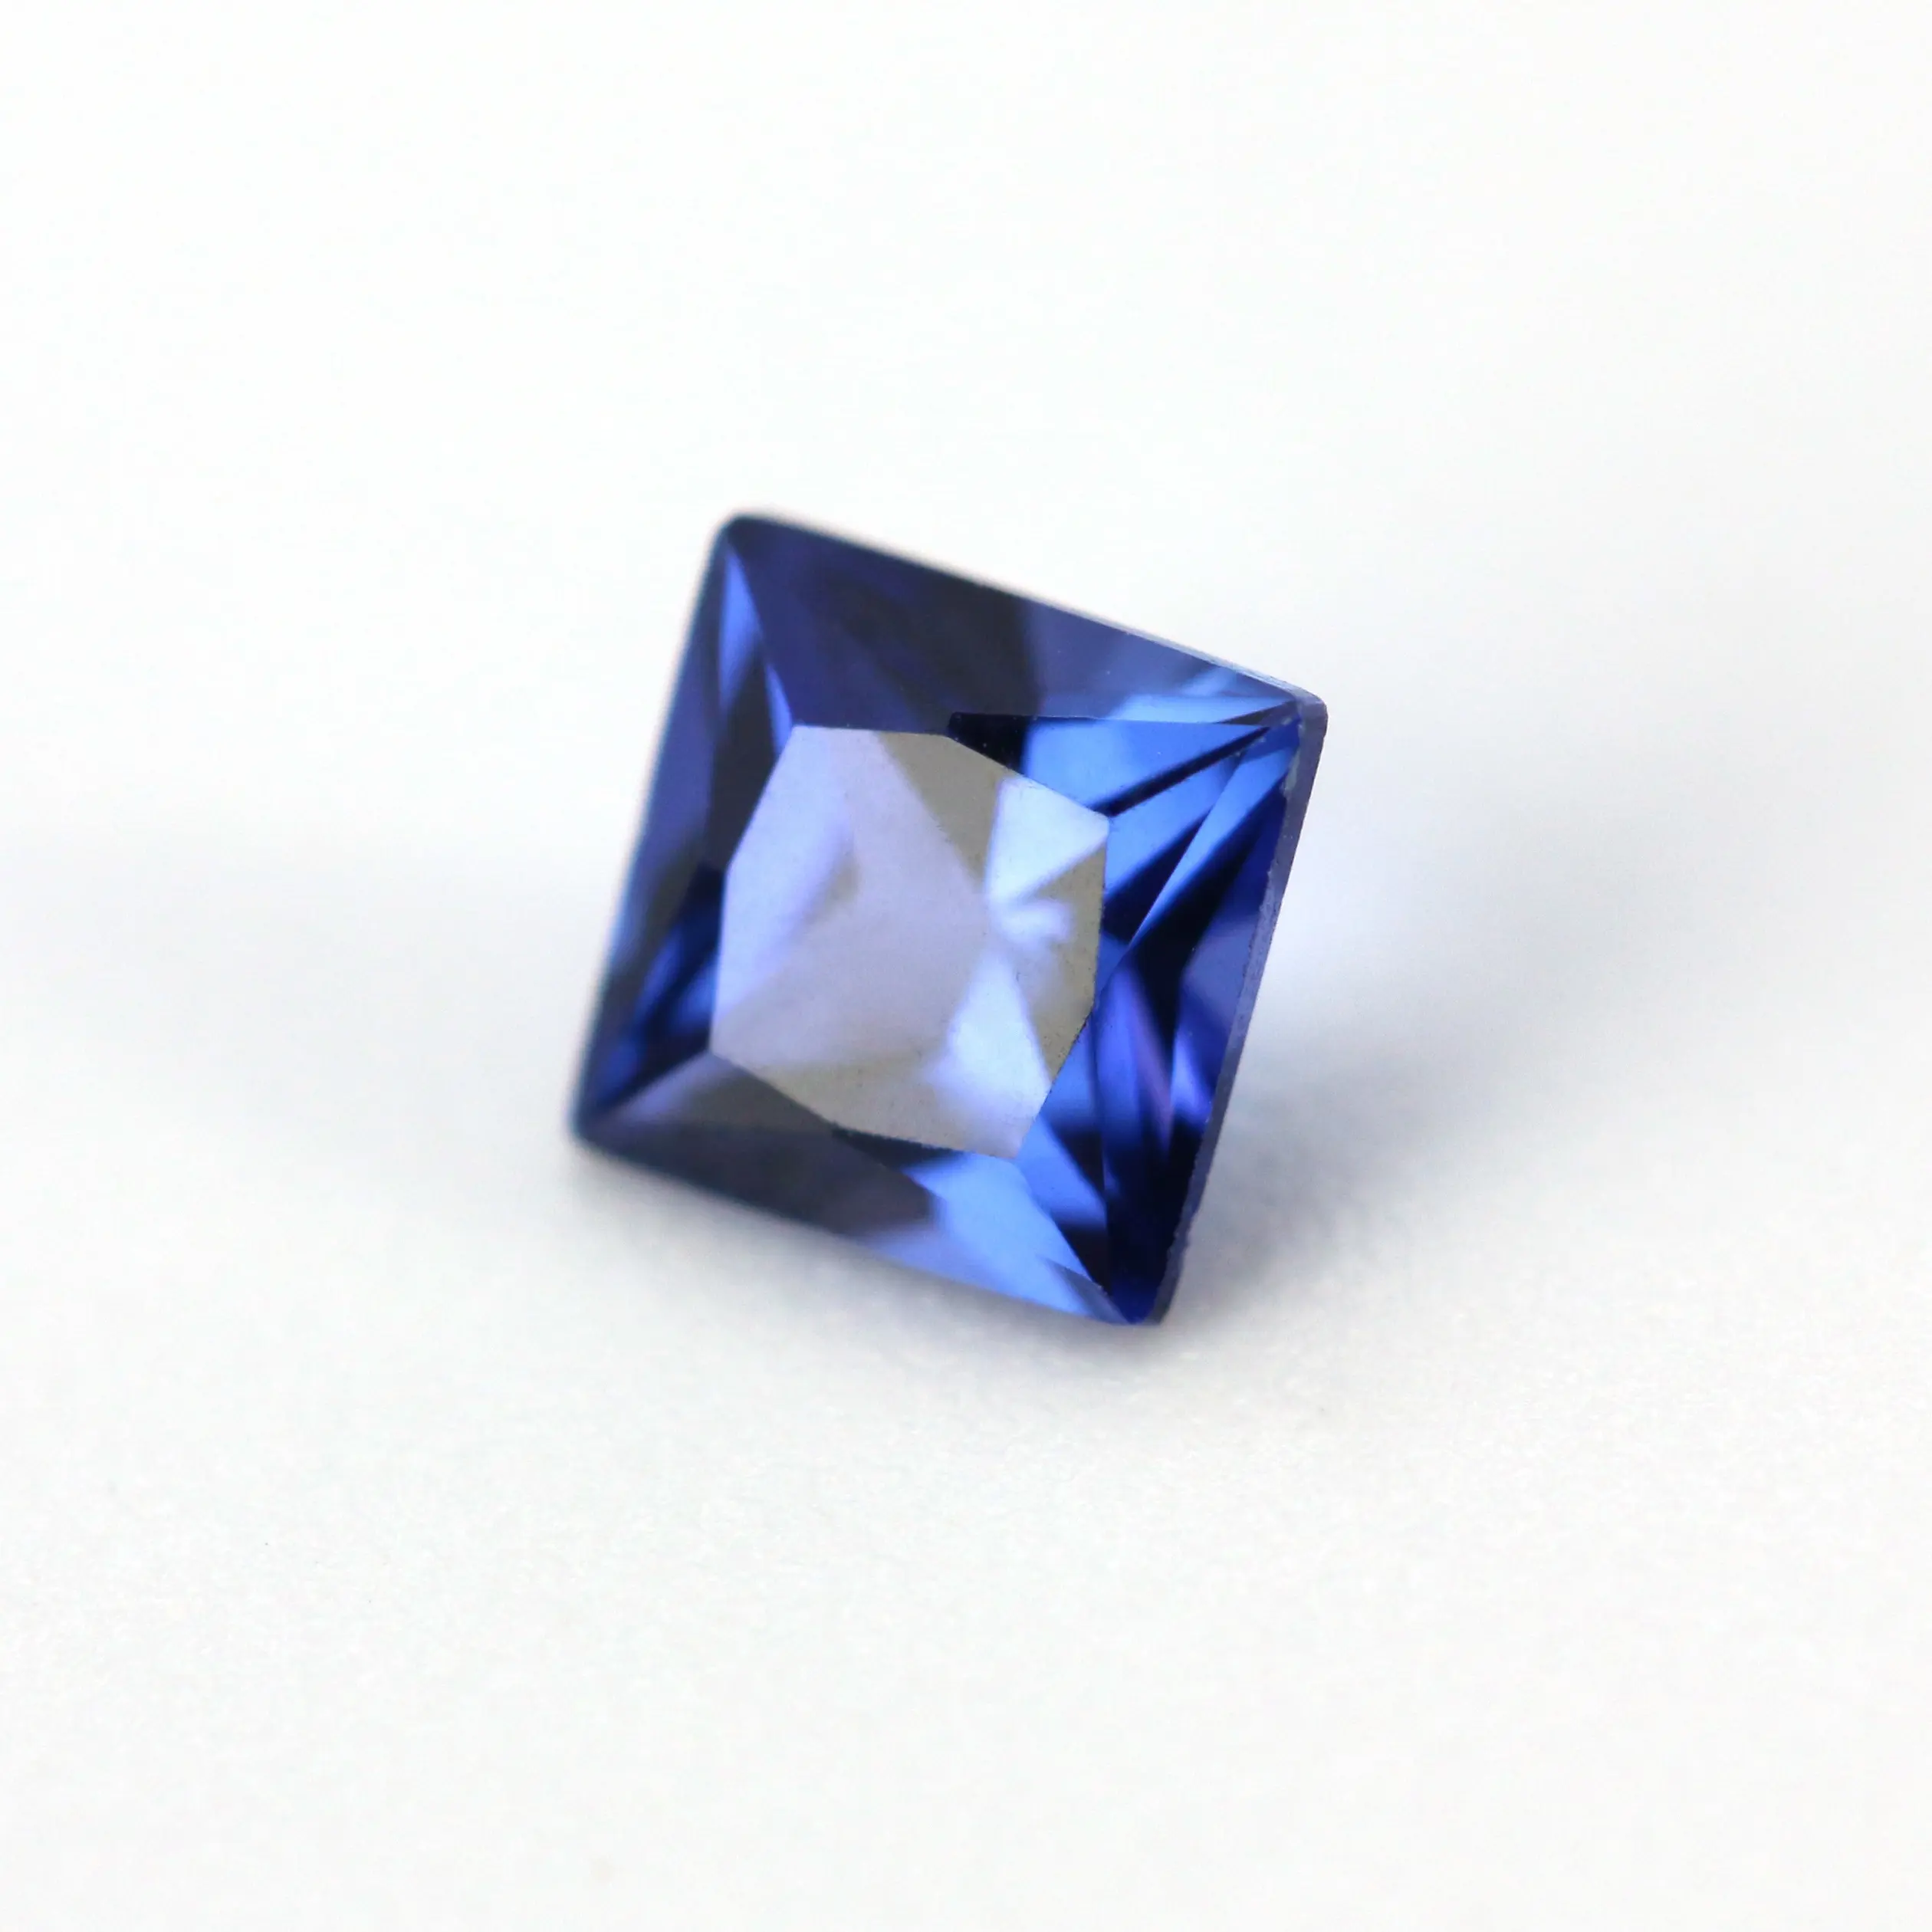 Factory Price Per Carat Corundum 3.5x3.5mm Square Cut Loose Gemstone Blue Sapphire For Jewelry/Inlay/Ring